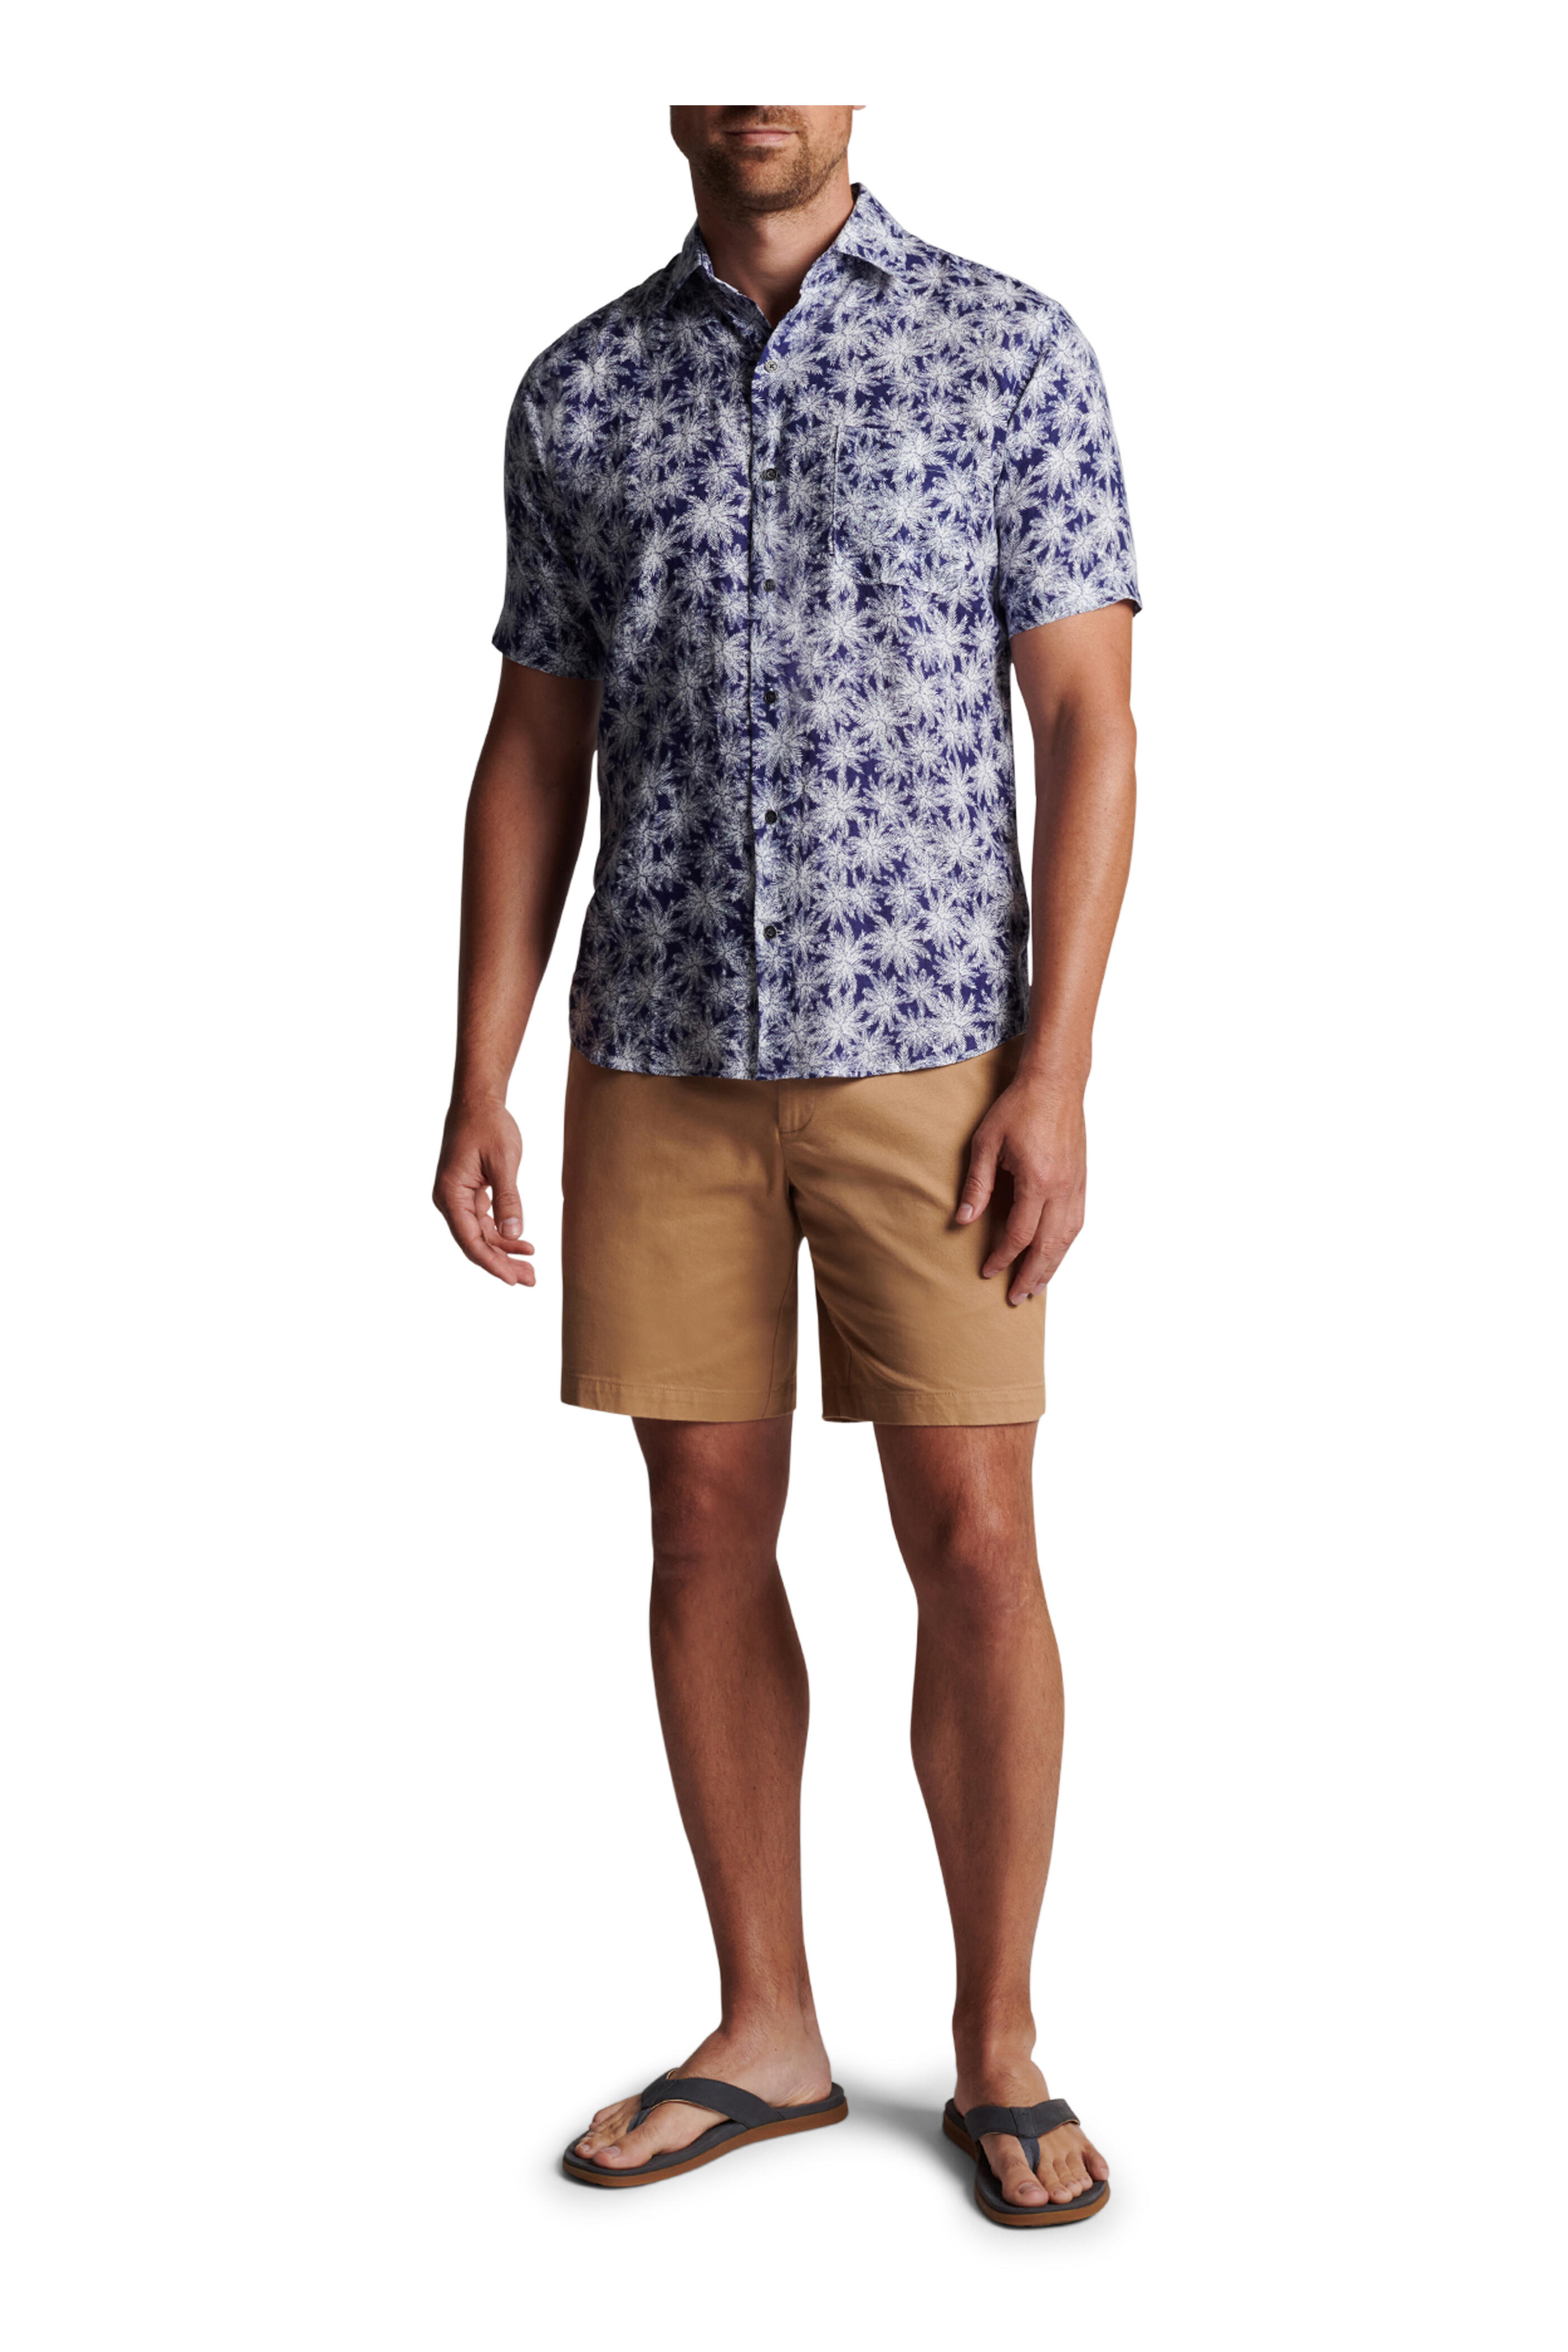 Peter Millar - Key Cove Atlantic Blue Linen Sport Shirt